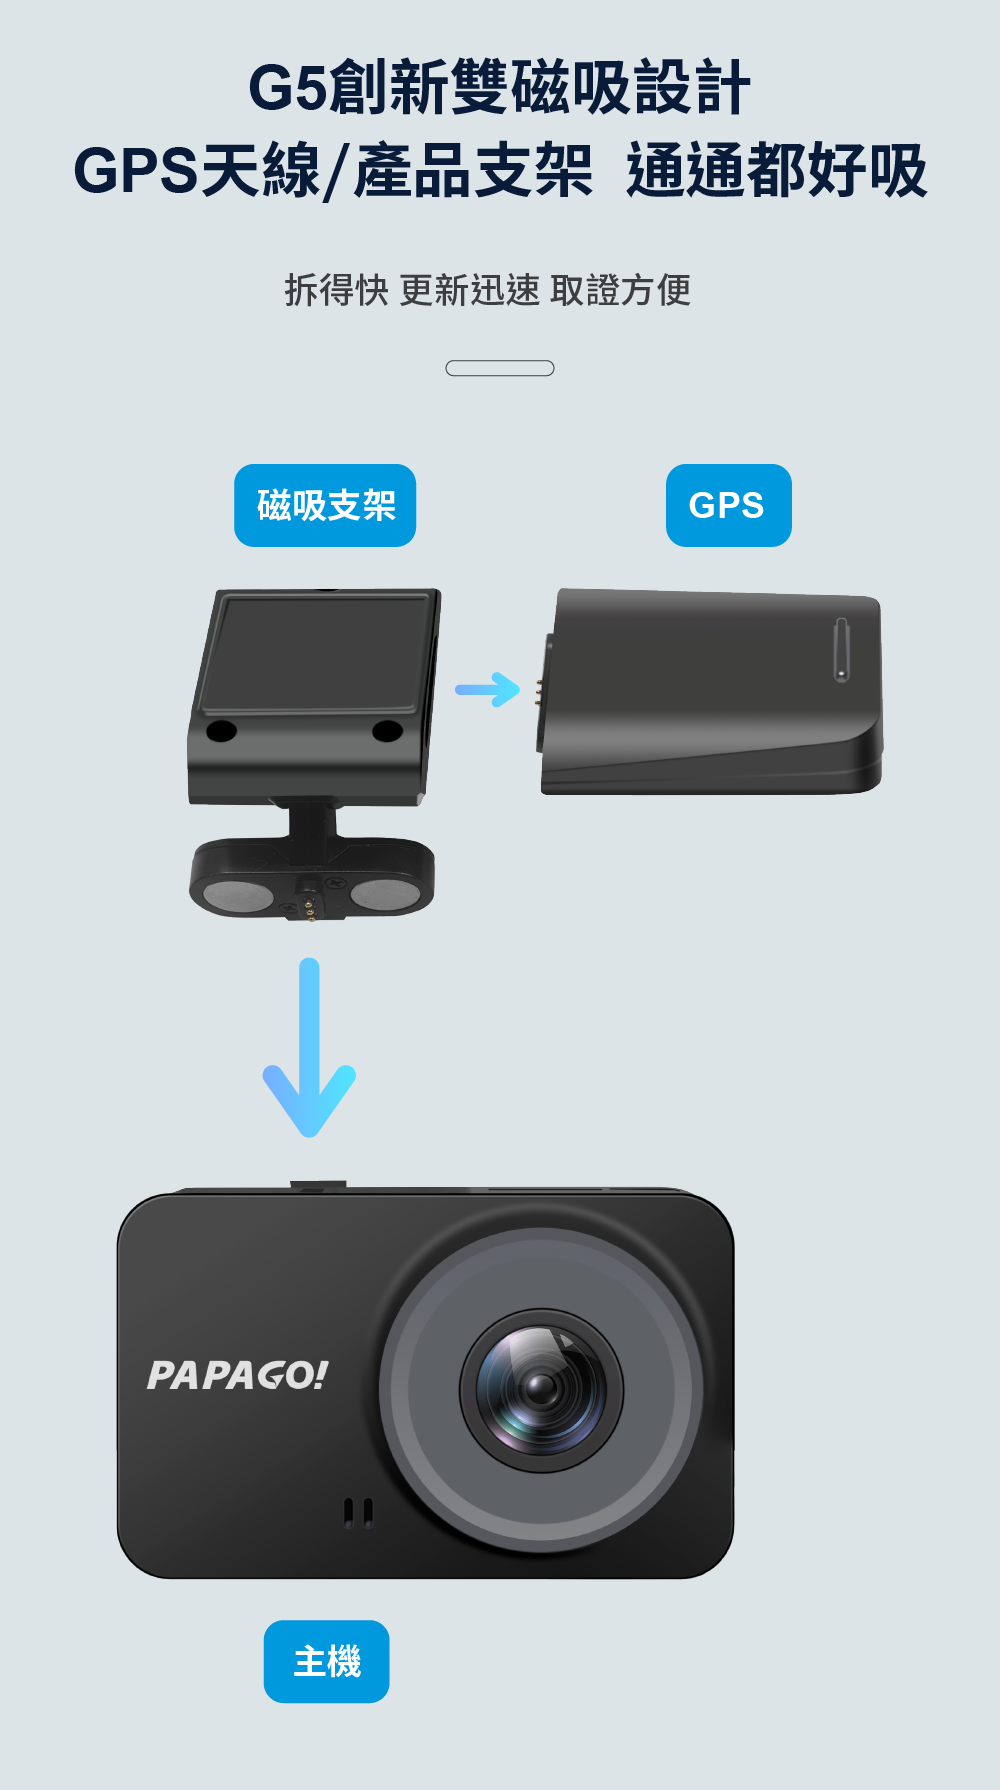 PAPAGO! G5 行車紀錄器 產品介紹12